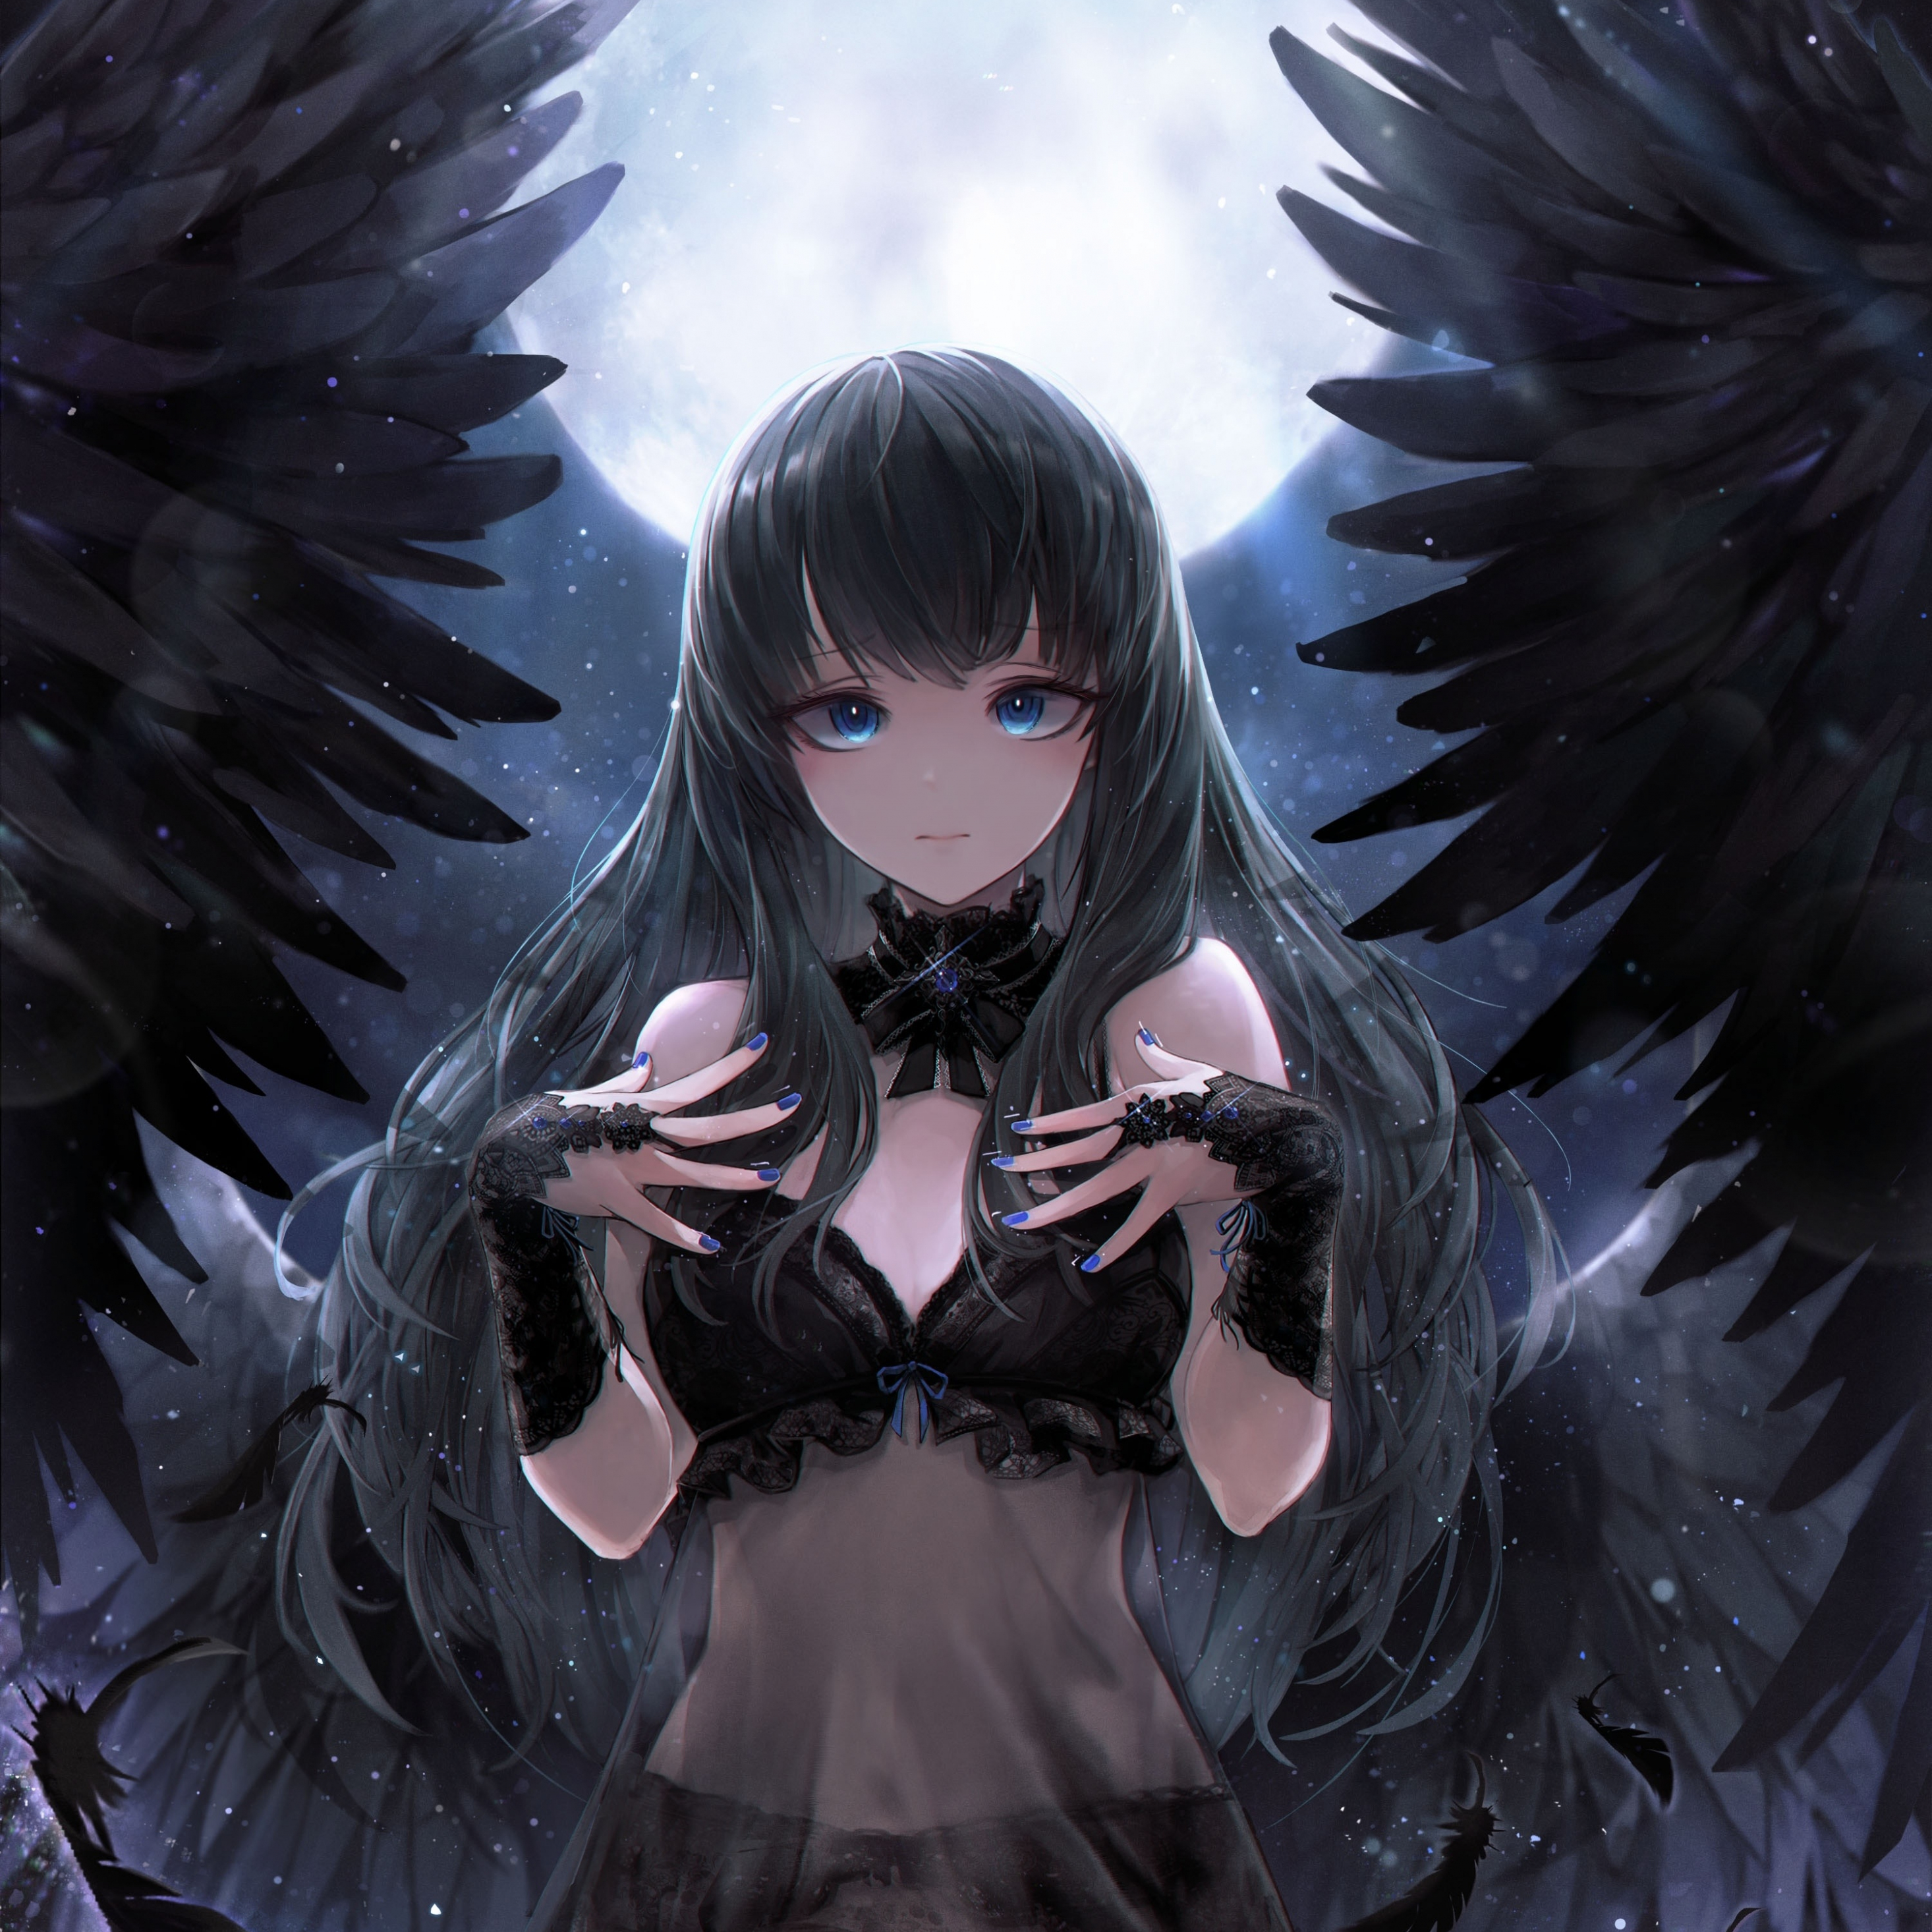 Download 2932x2932 Wallpaper Black Angel Cute Anime Girl Art